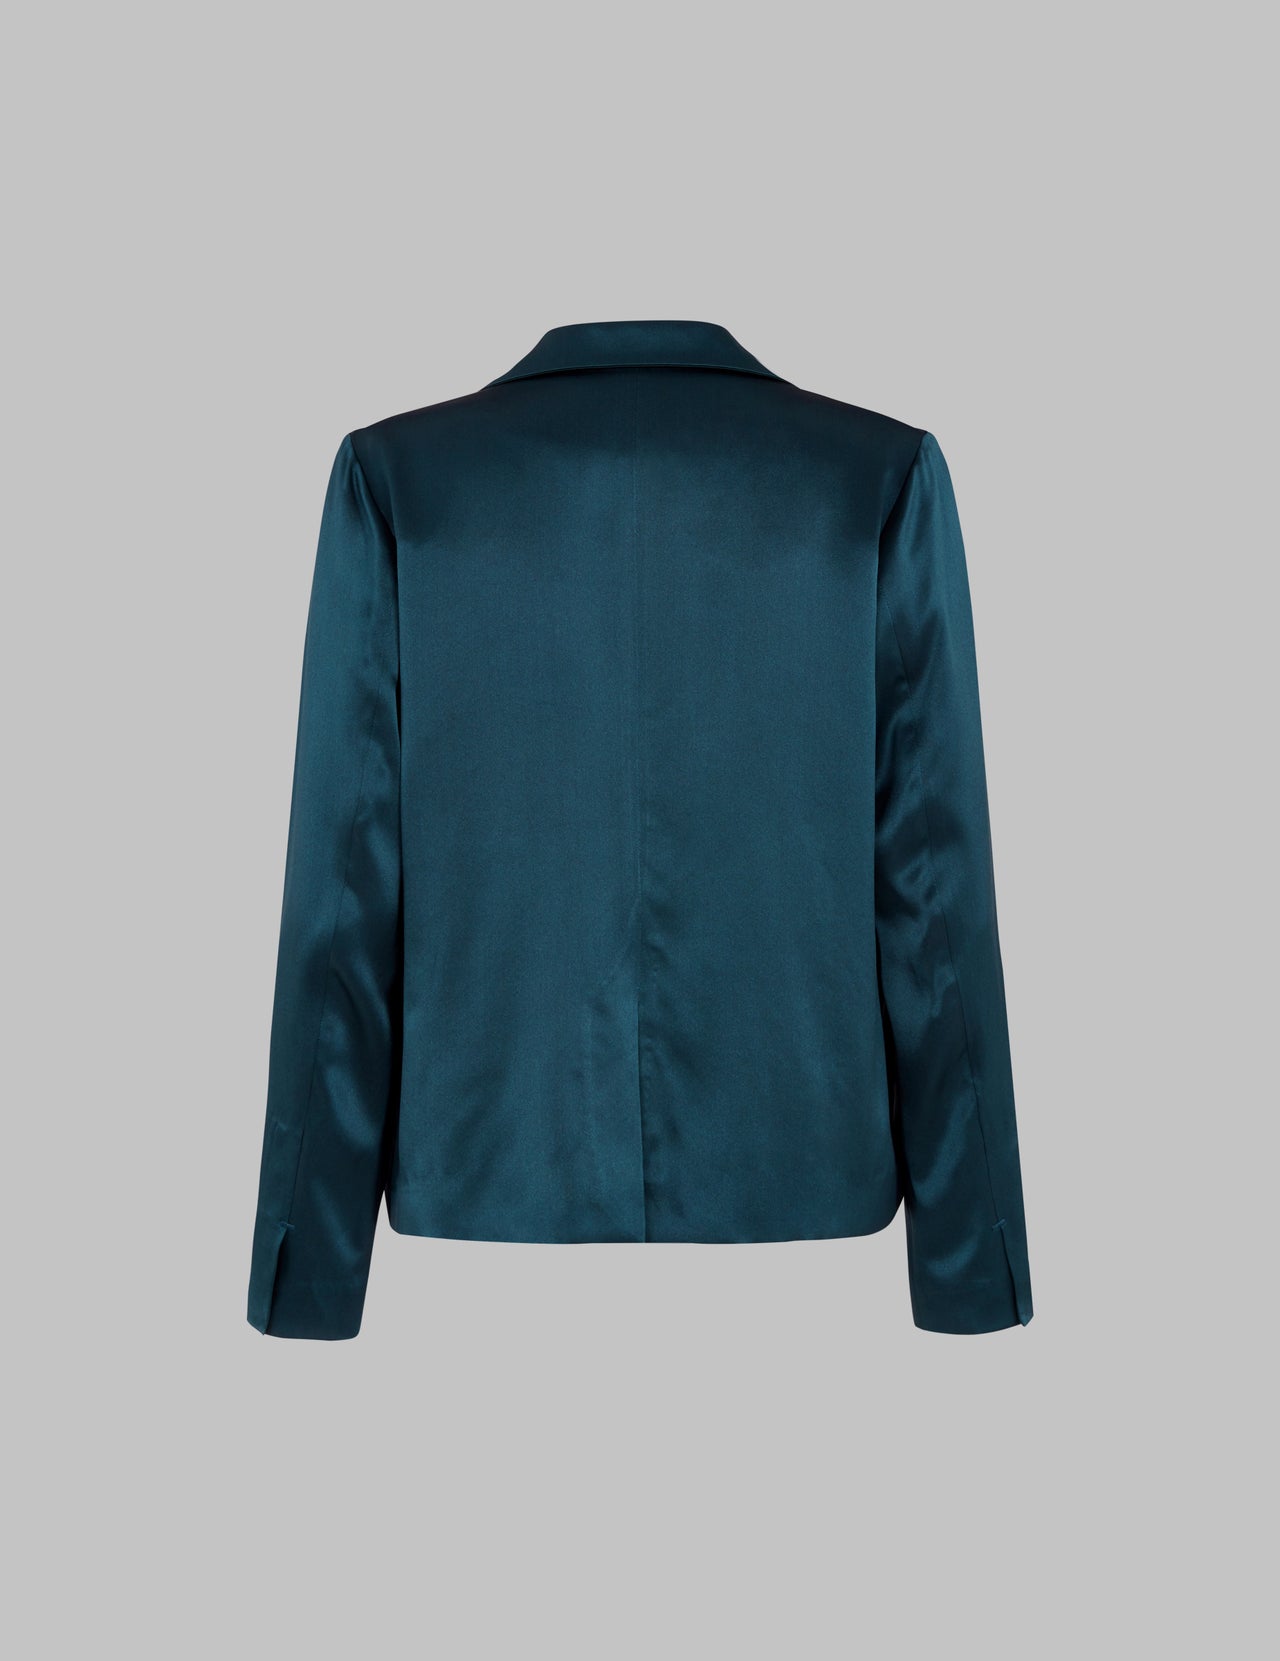  Teal Silk Satin Deconstructed Jacket  